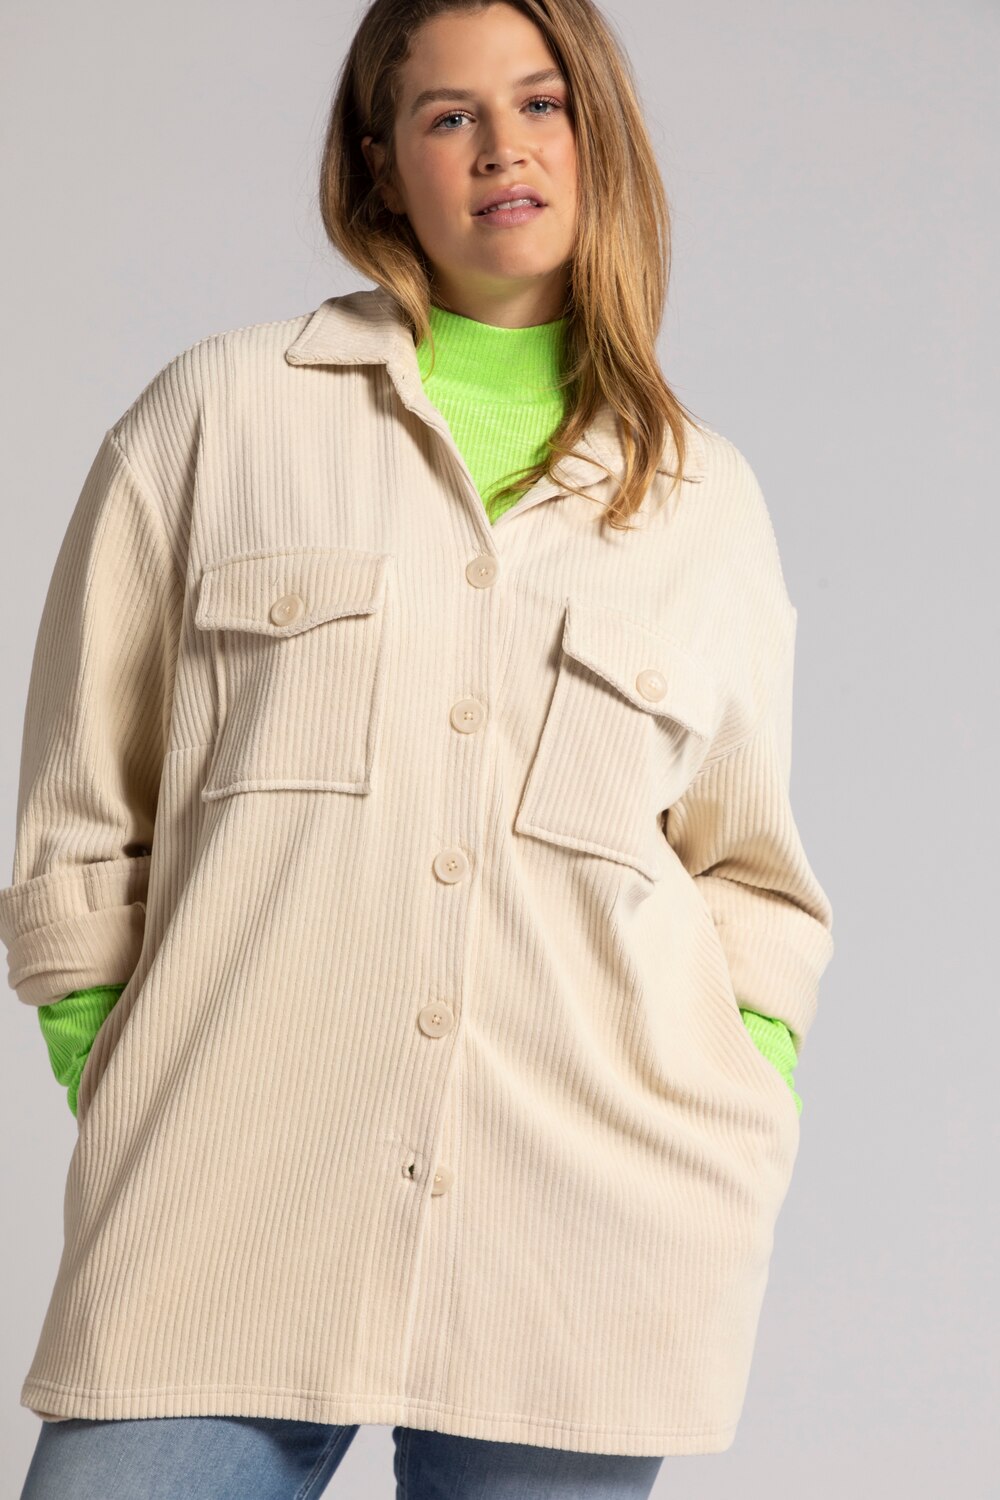 Plus Size Cord Shirt, Woman, beige, size: 16/18, cotton/polyester, Studio Untold